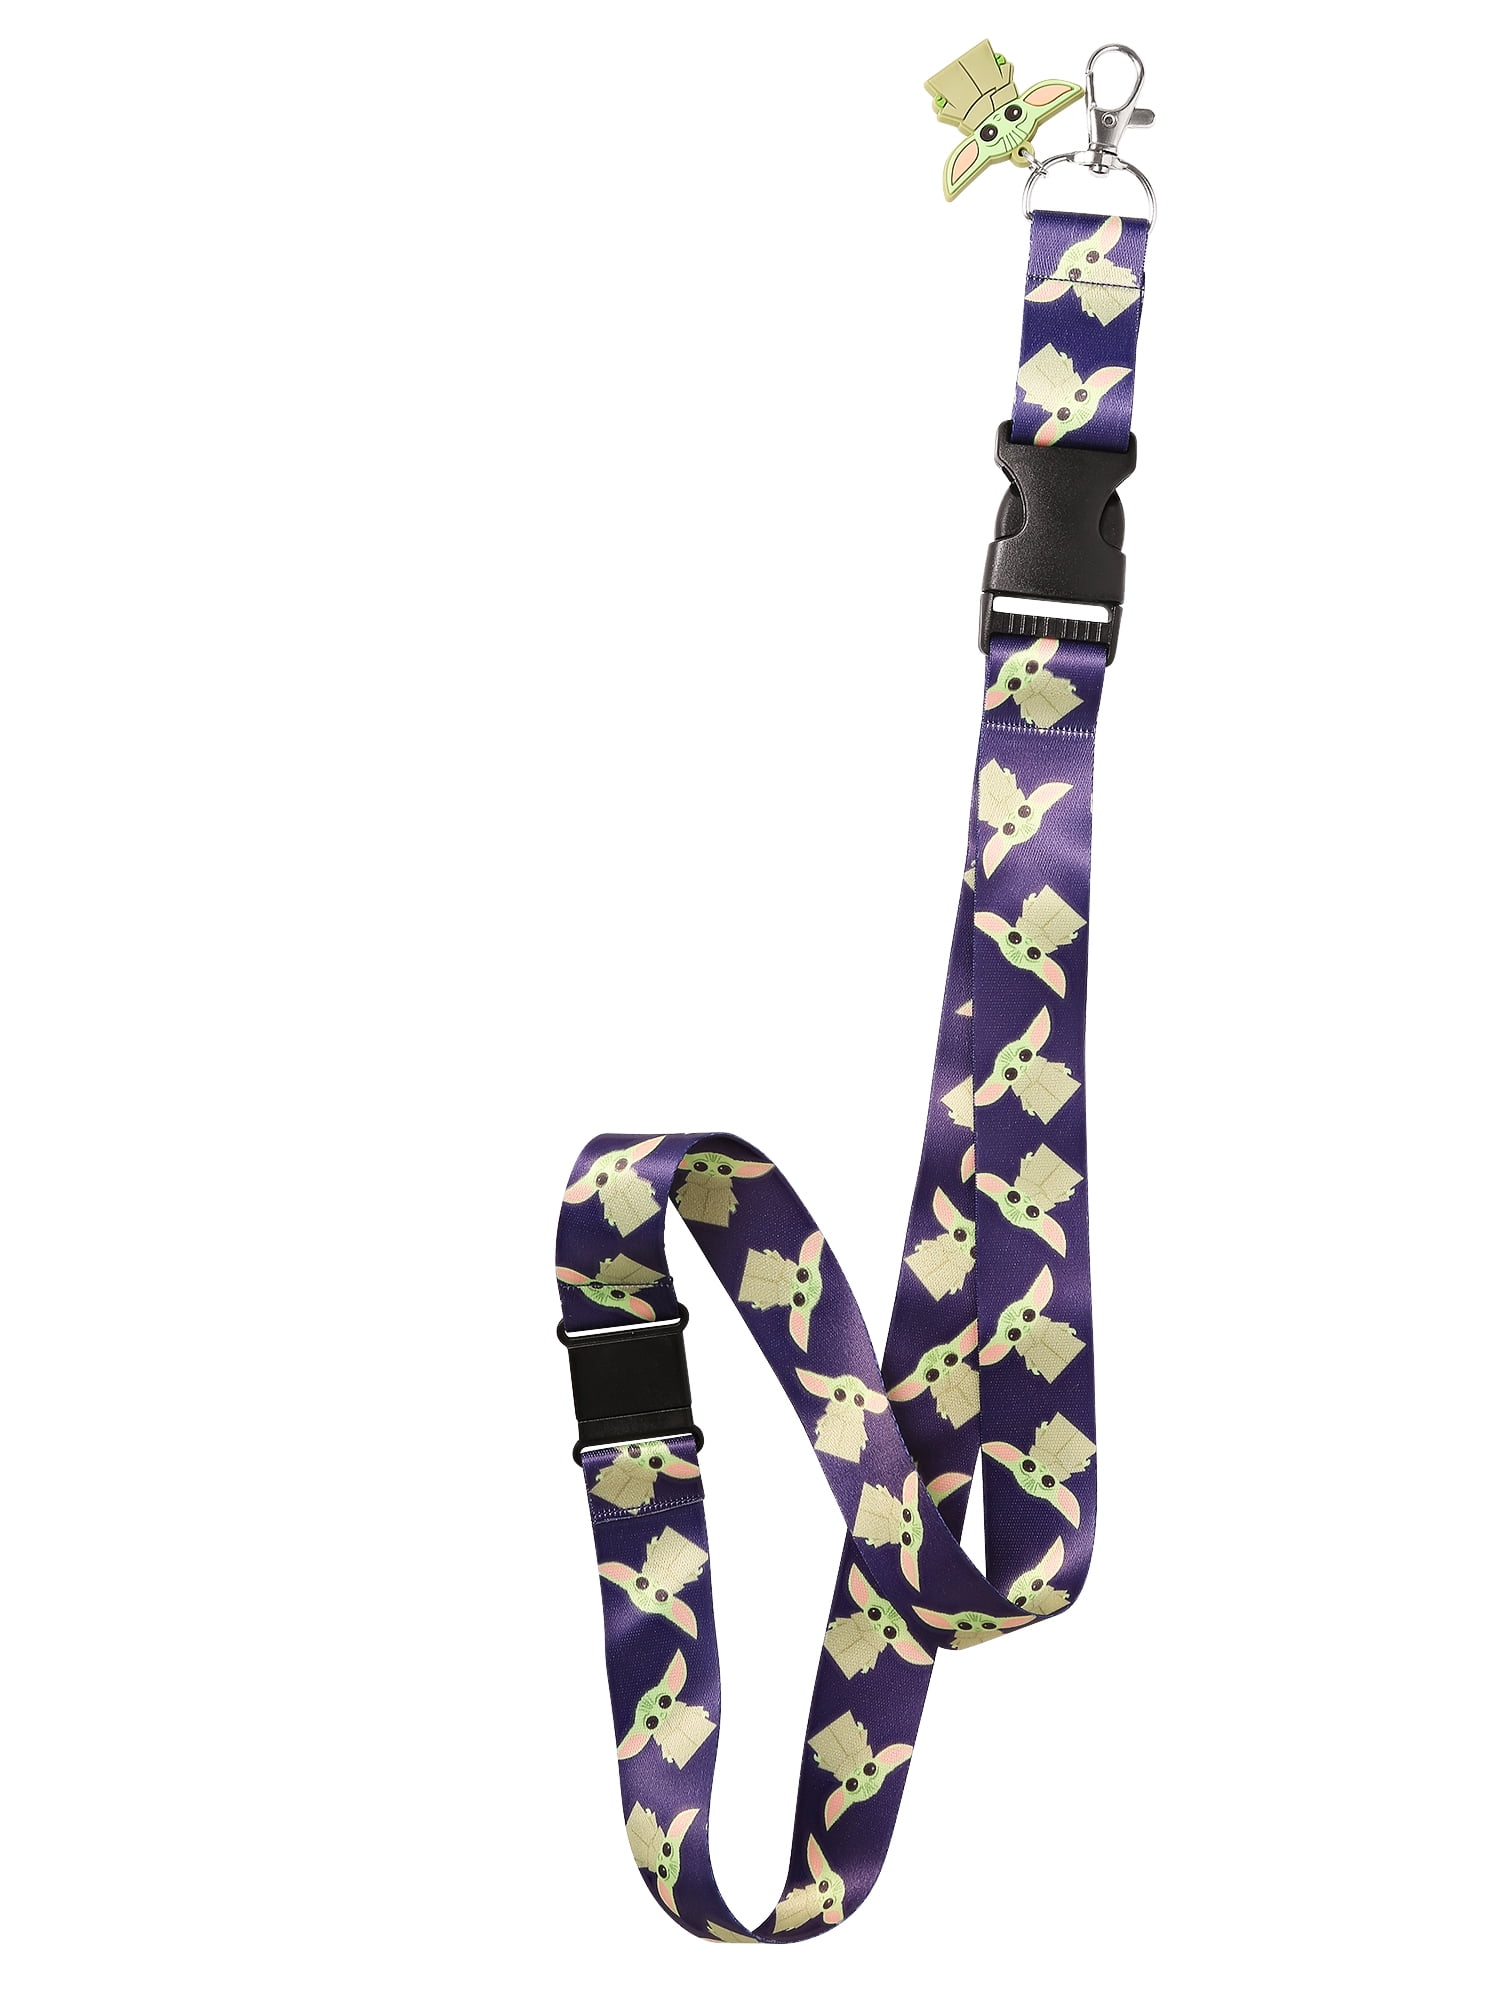 Scooby Doo Wristband 3D Print Ribbon Bag Pendant Mobile Phone Lanyards Bracelet 